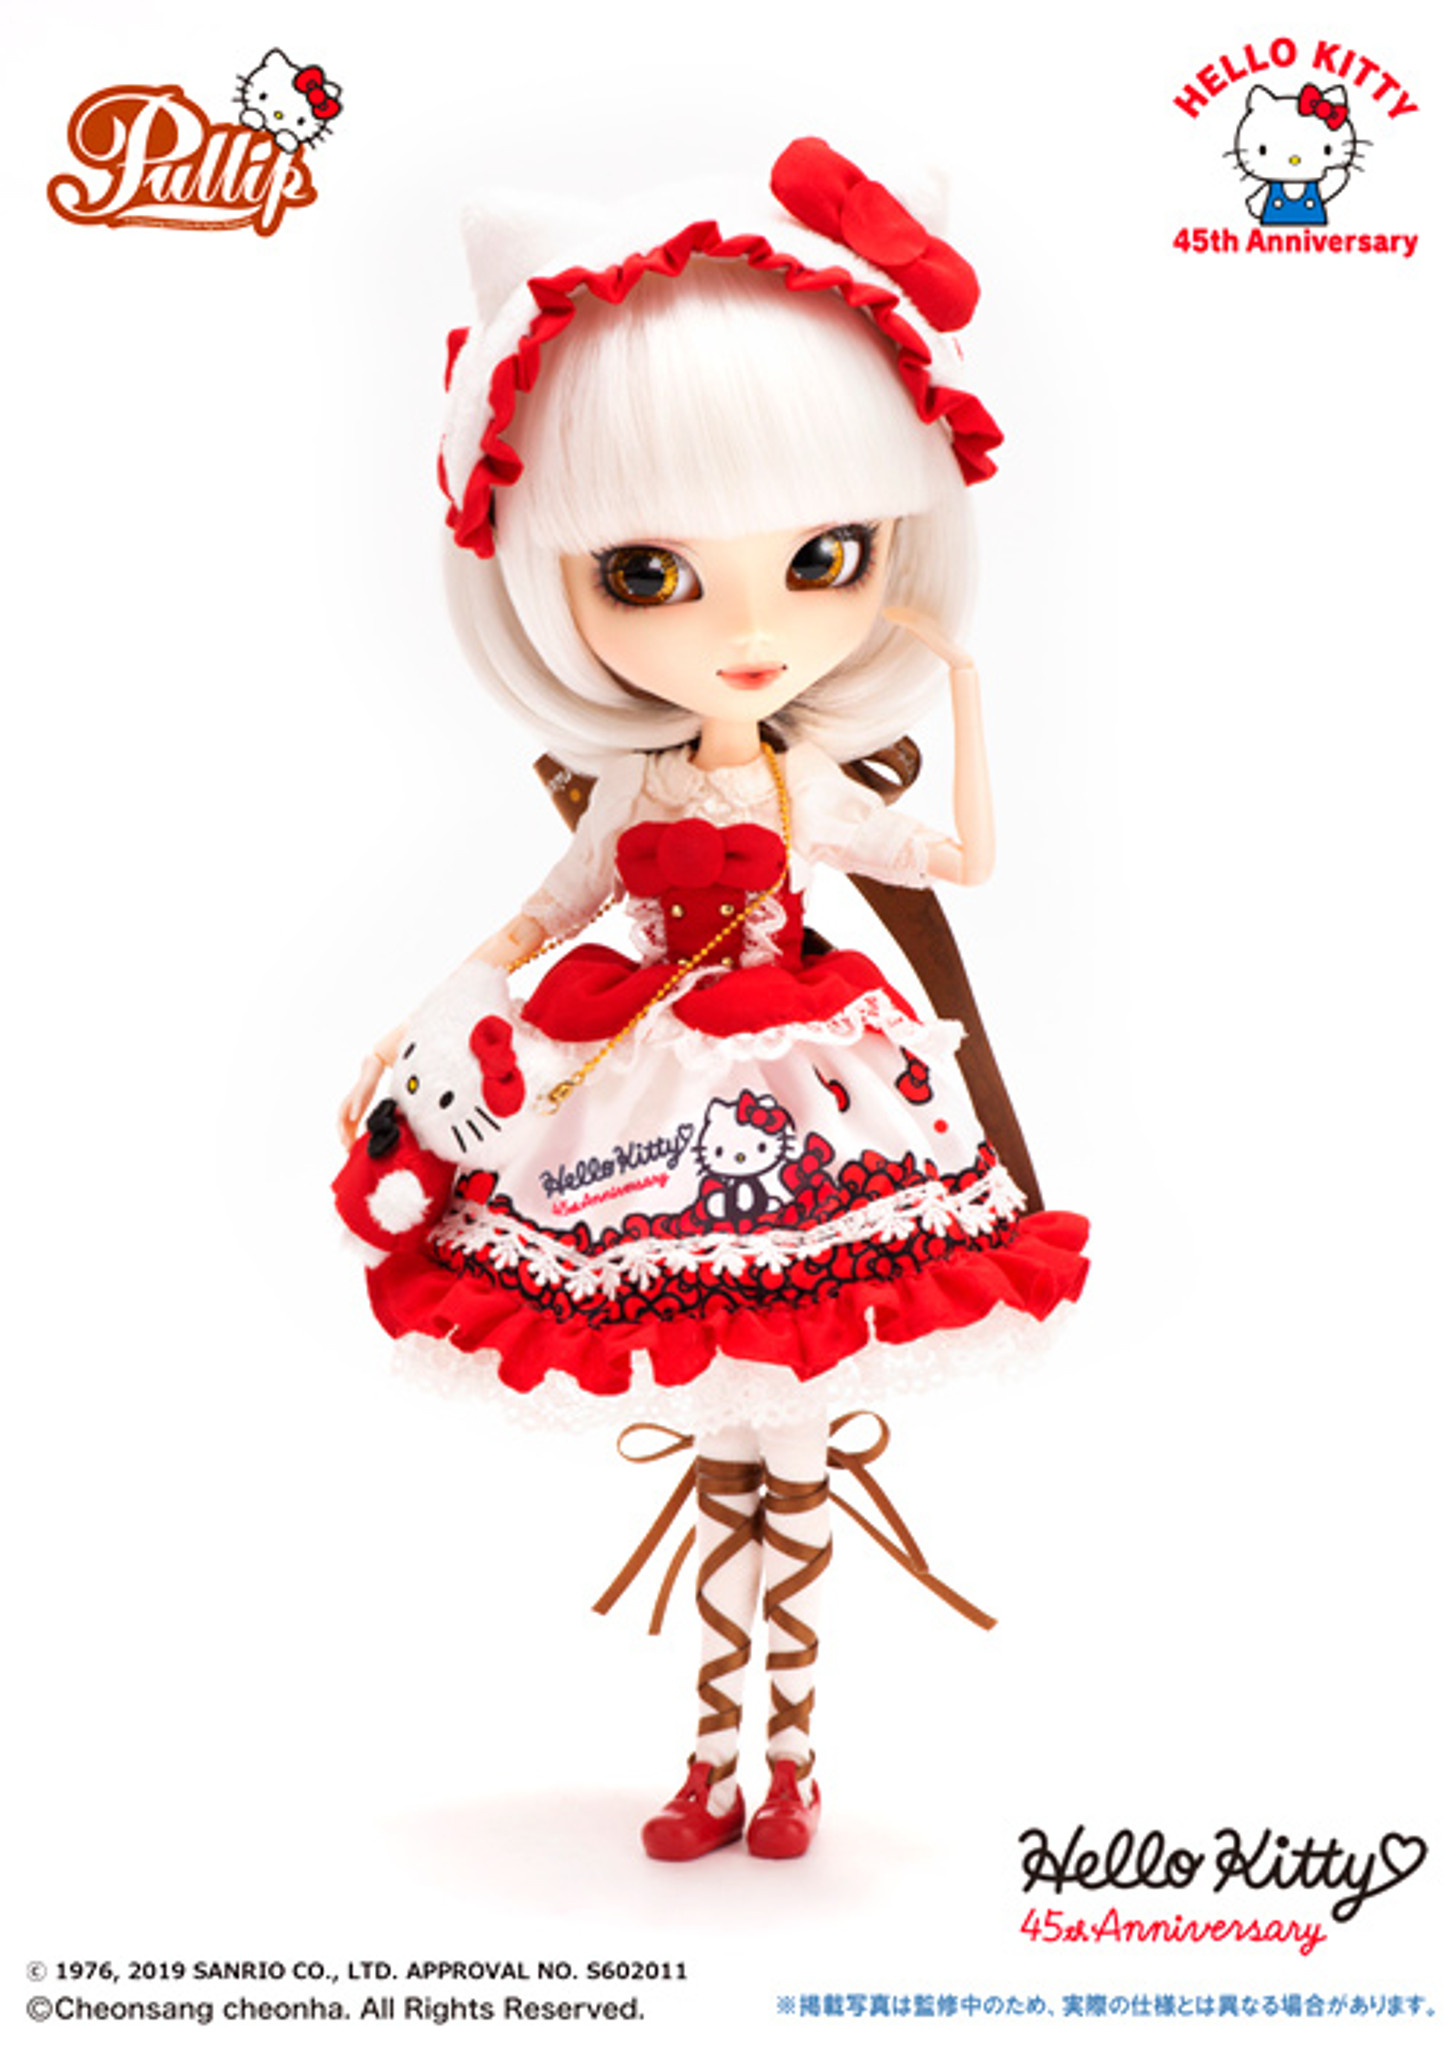 Sample Doll / Hello Kitty ★45th Anniversary